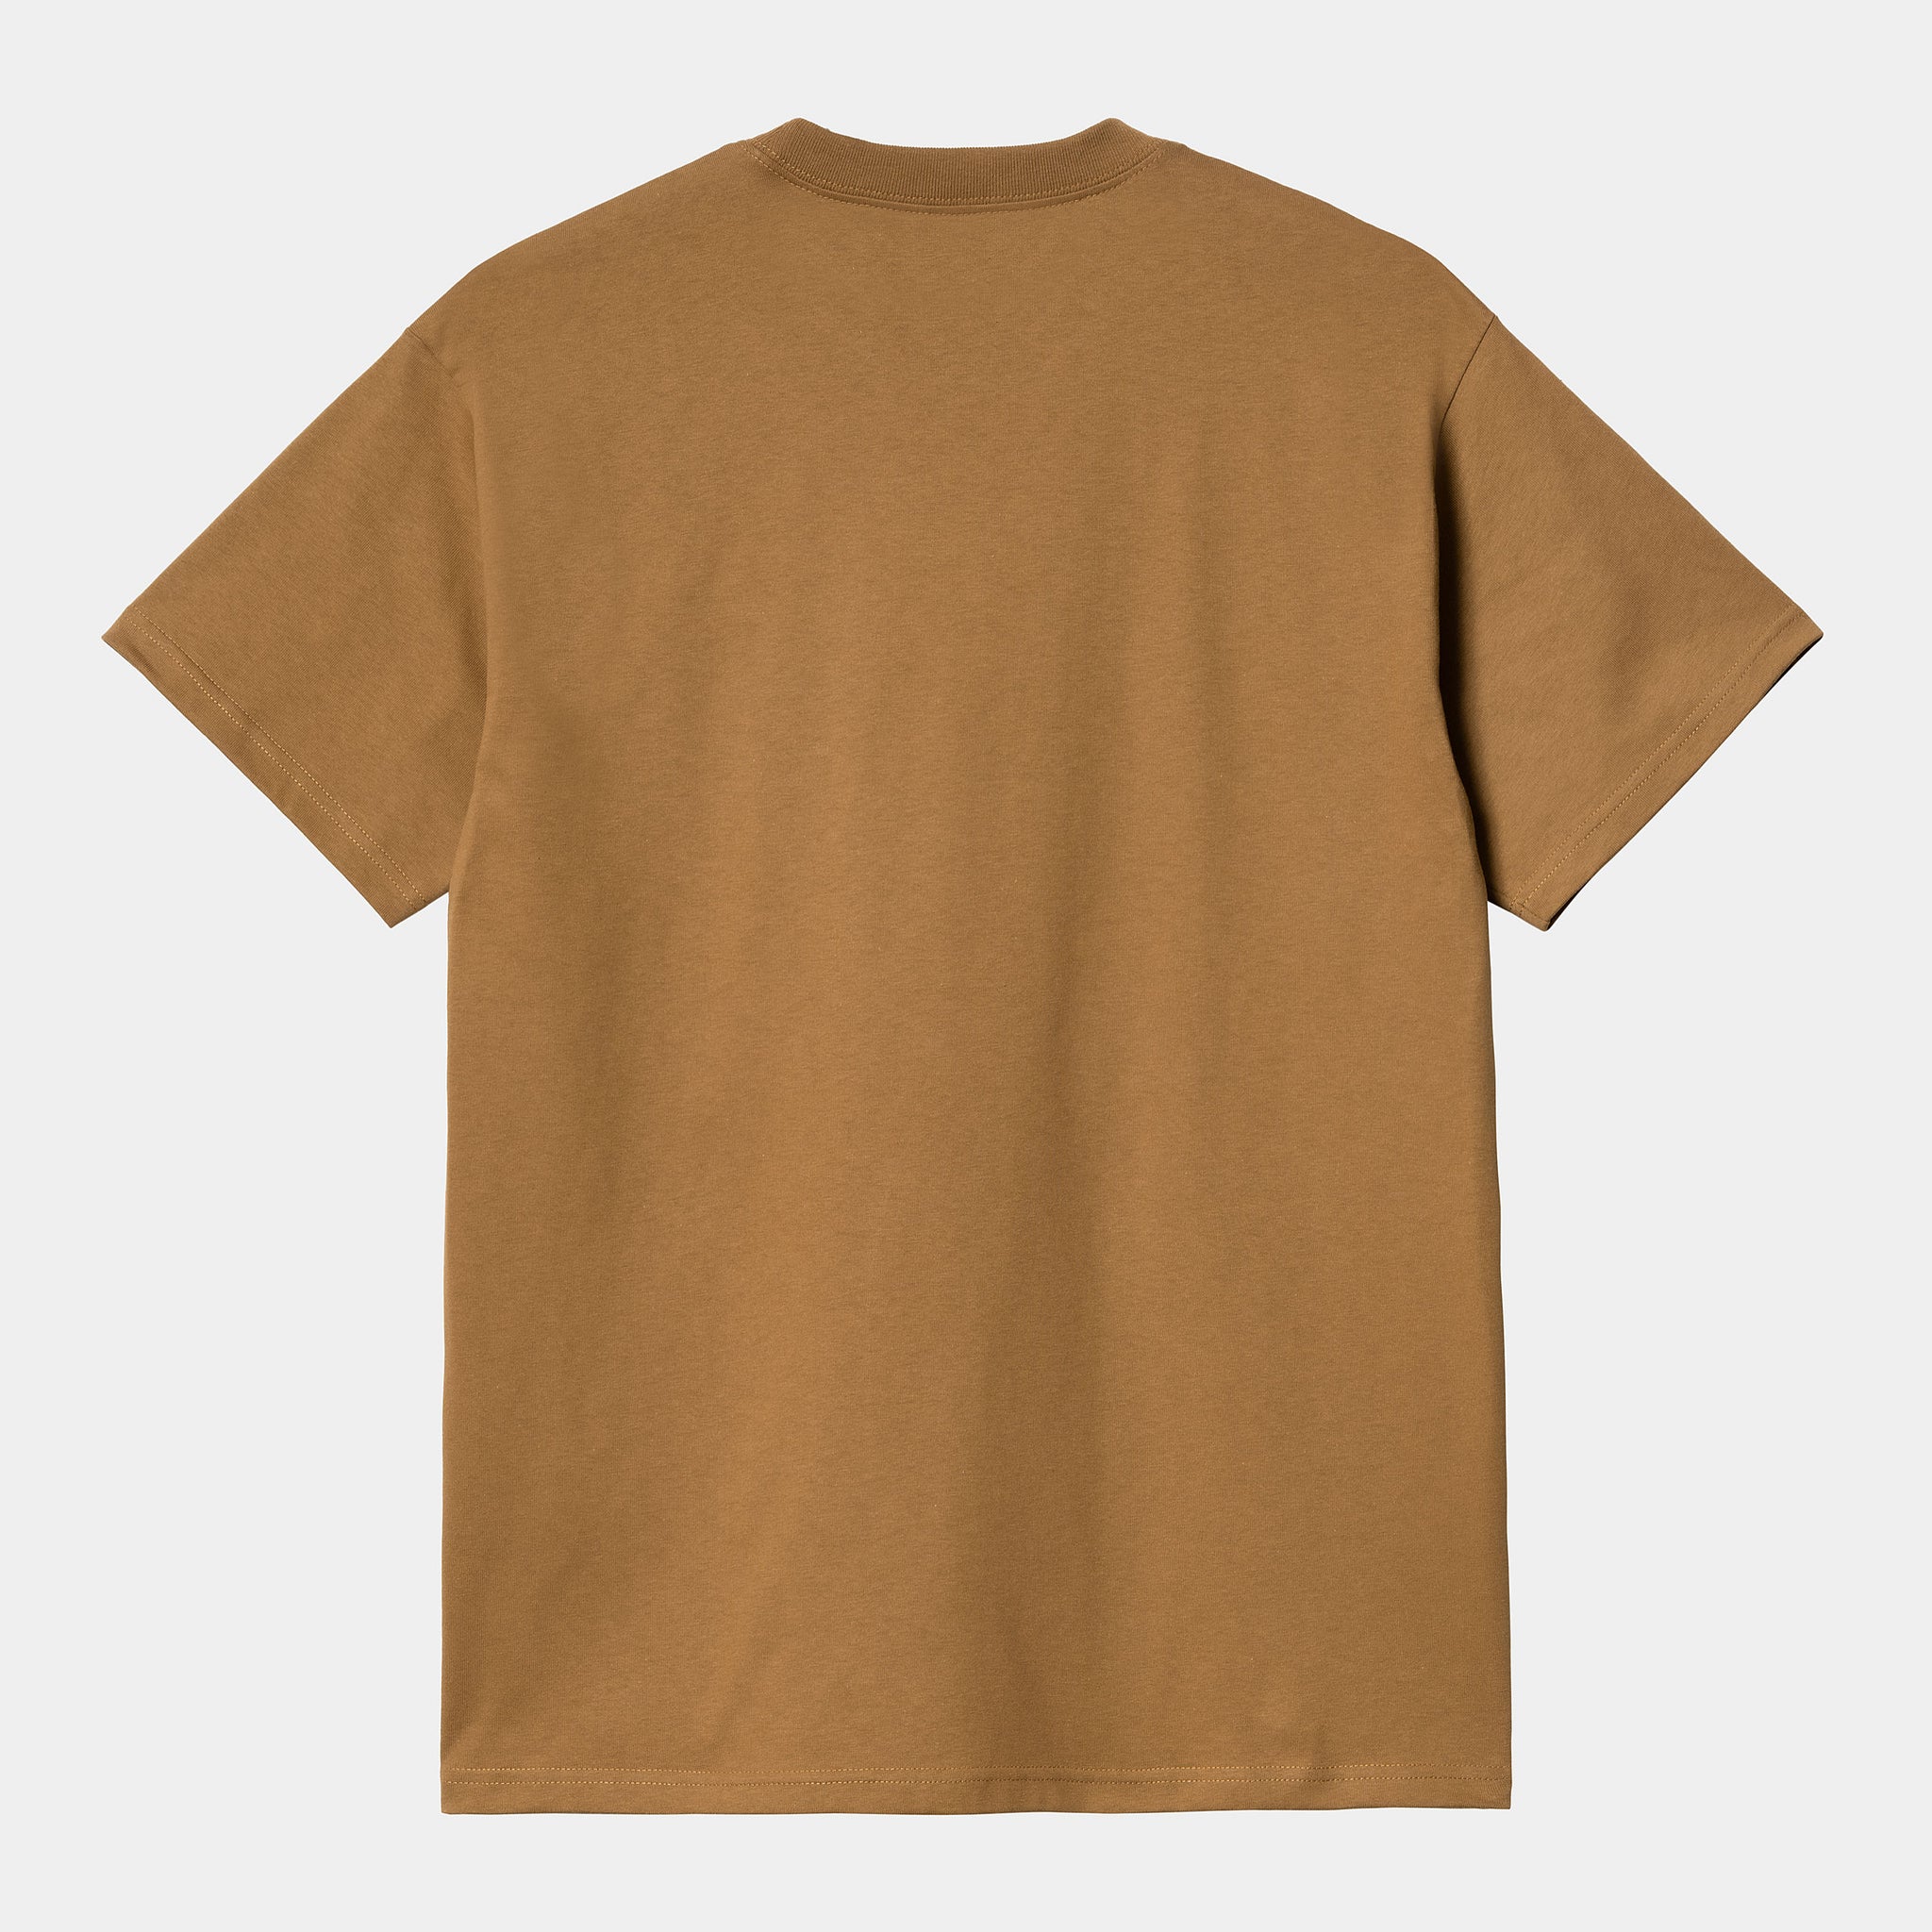 Carhartt WIP S/S Icons T-Shirt Hamilton Brown / Black